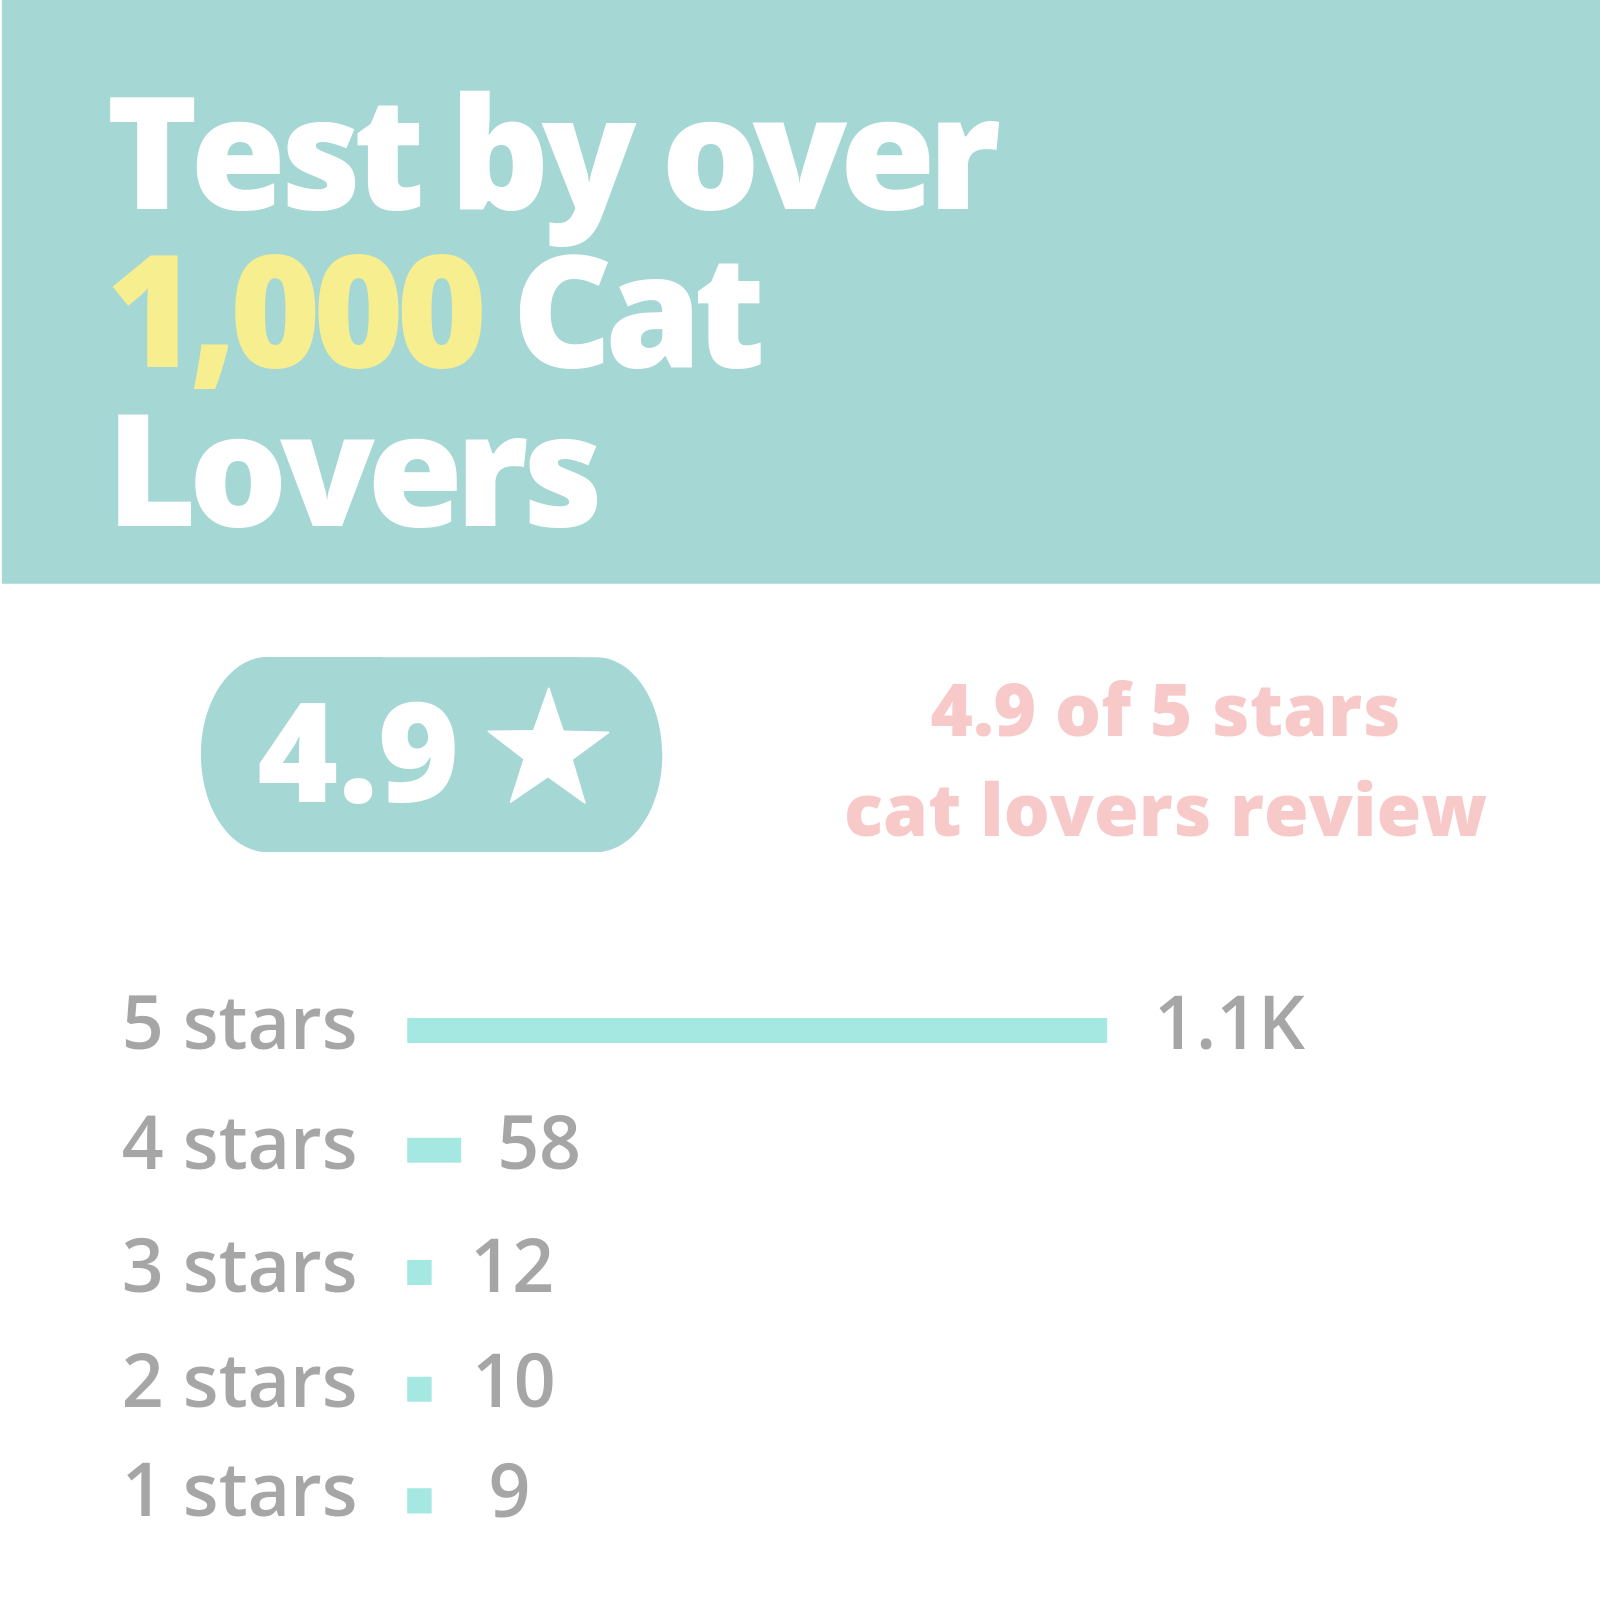 tofu cat litter customer review